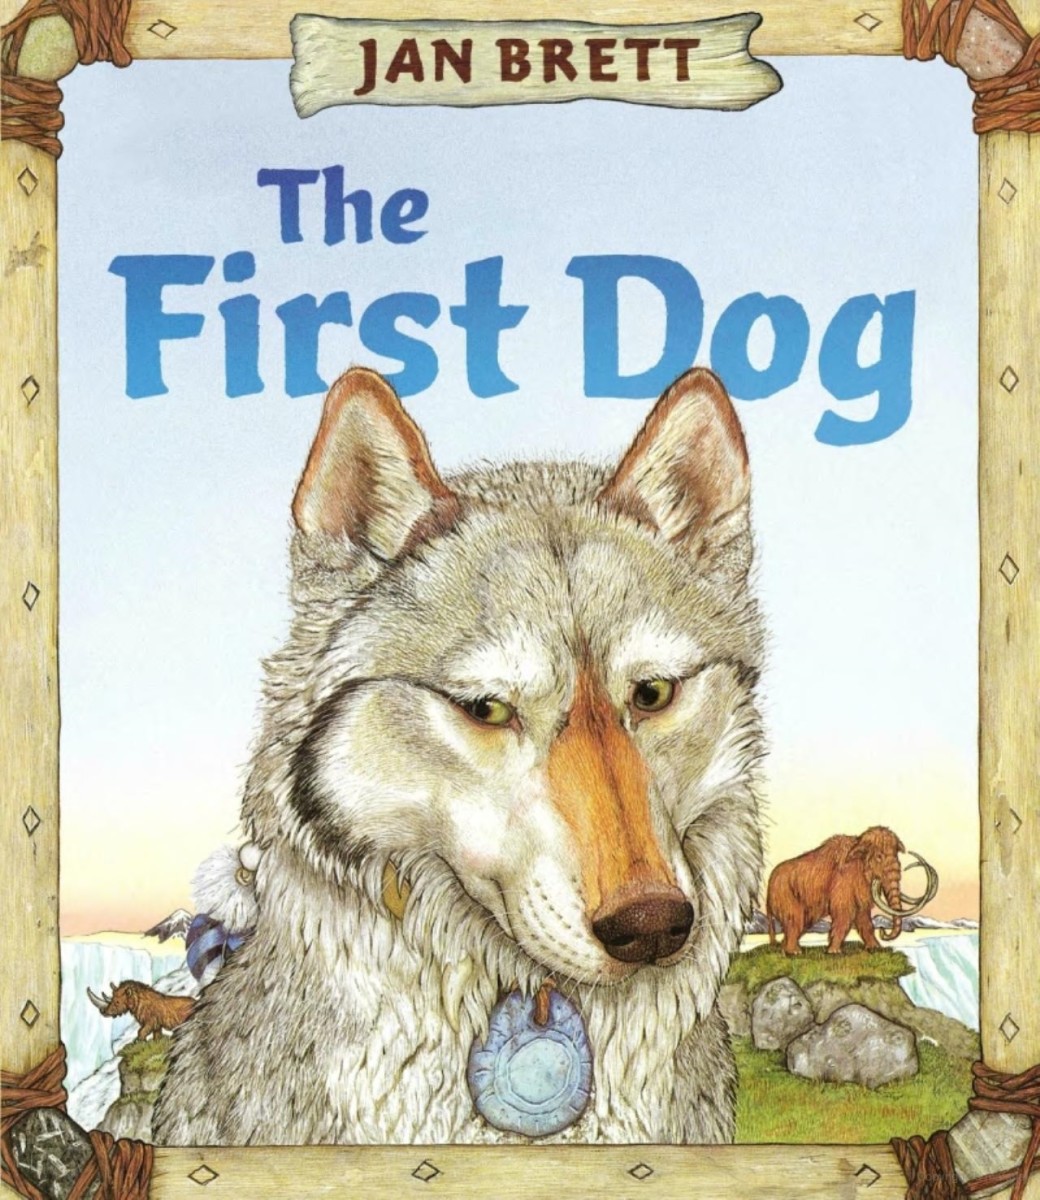 The First Dog by Jan Brett